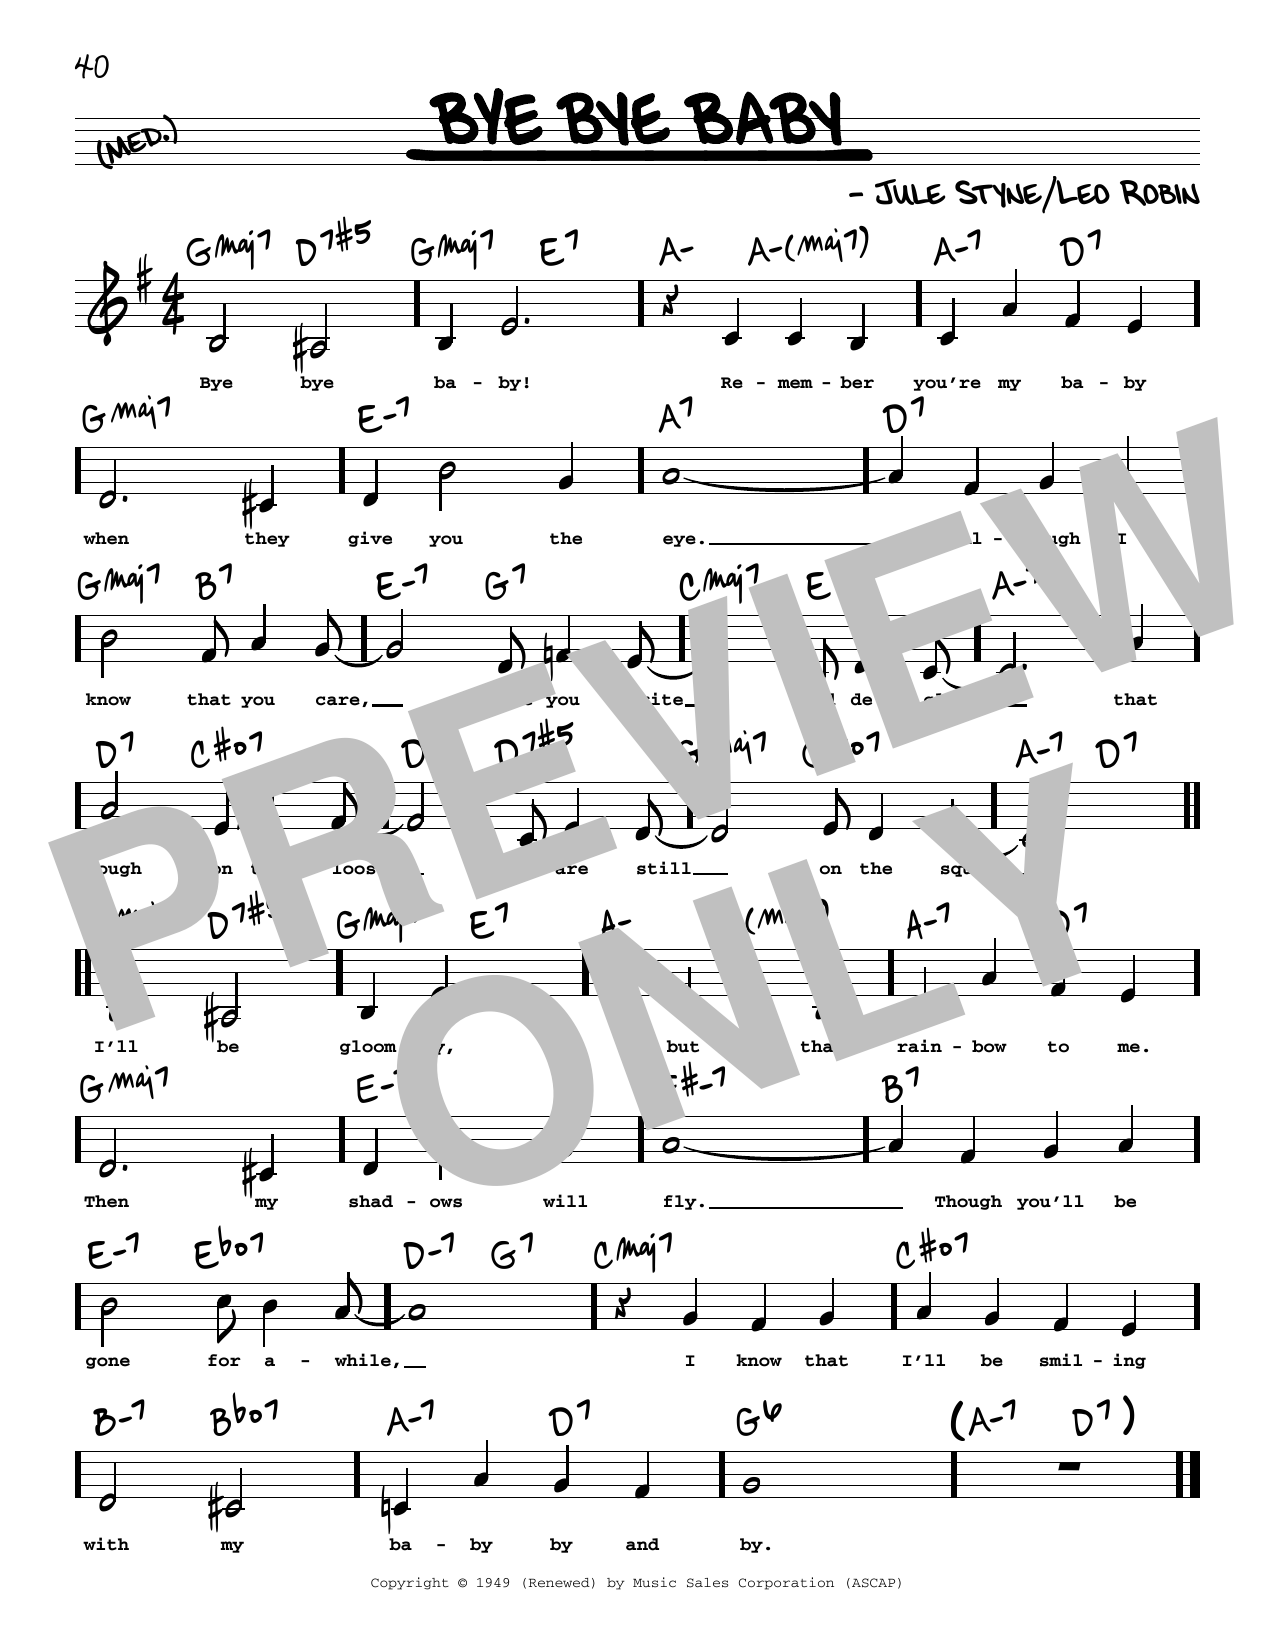 Leo Robin Bye Bye Baby (Low Voice) sheet music notes printable PDF score